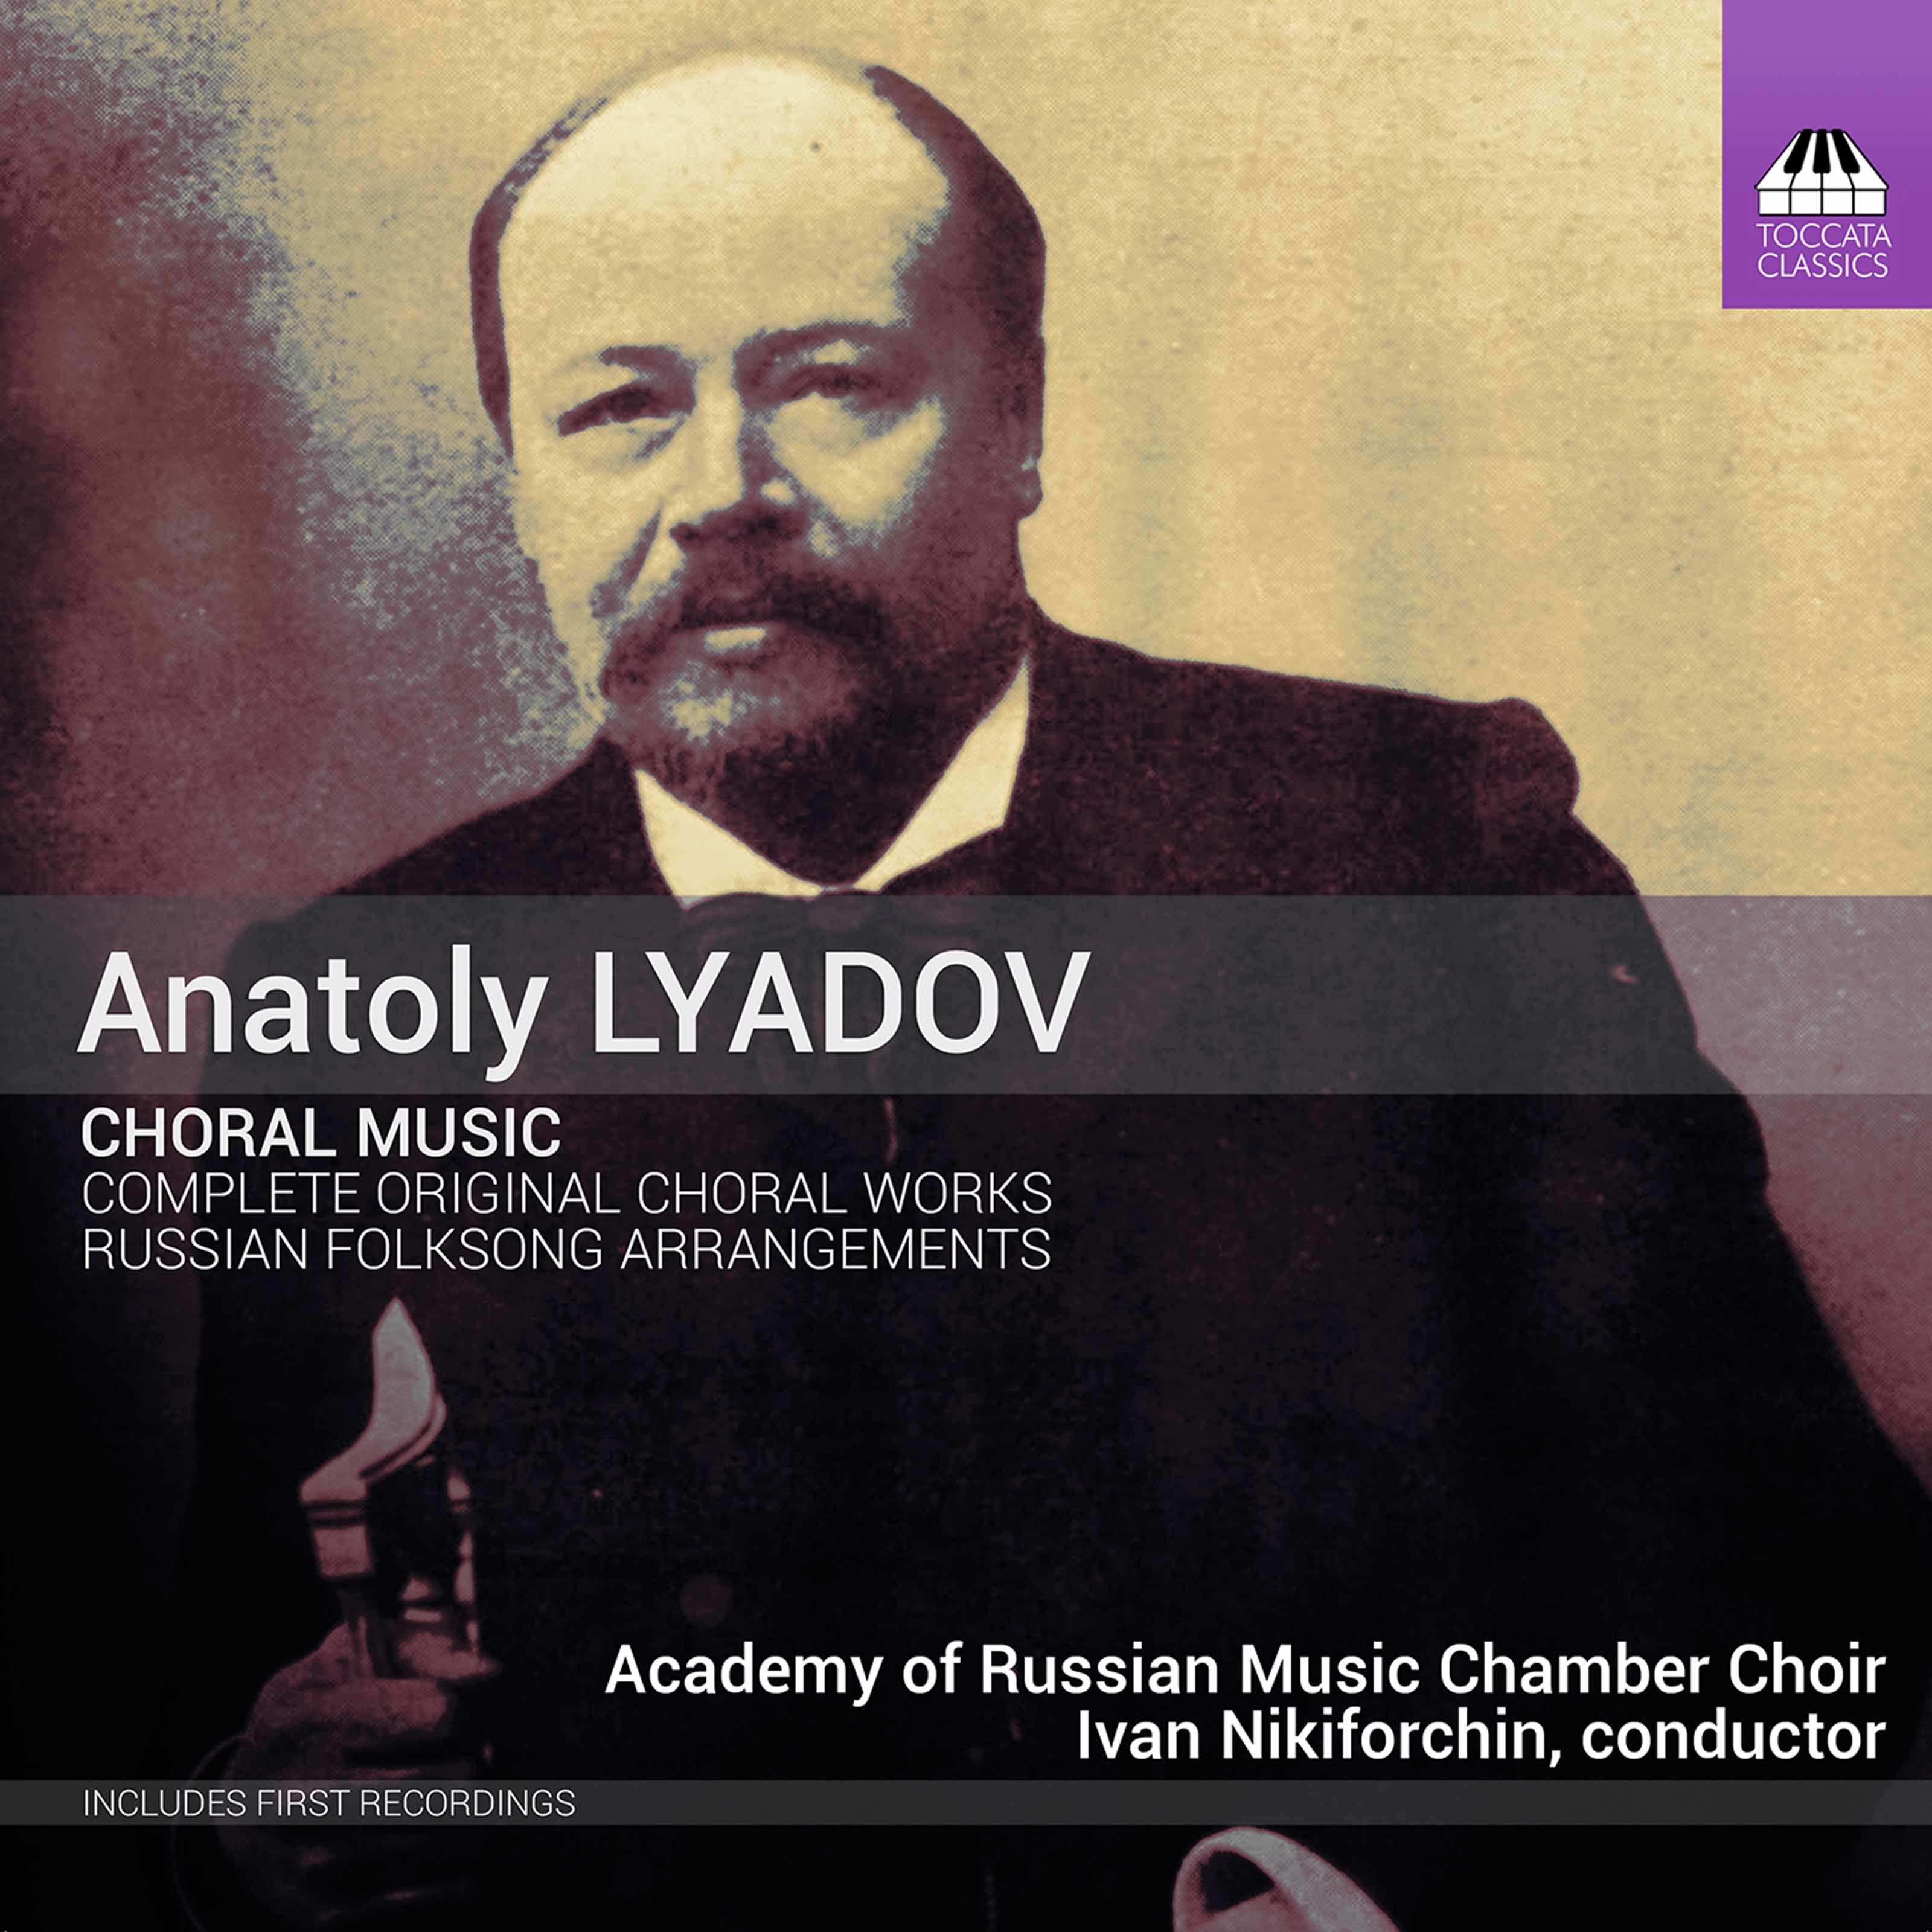 Academy of Russian Music Chamber Choir, Ivan Nikiforchin - Anatoly Lyadov-Complete Original Choral Works (2021) [FLAC 24bit/96kHz]